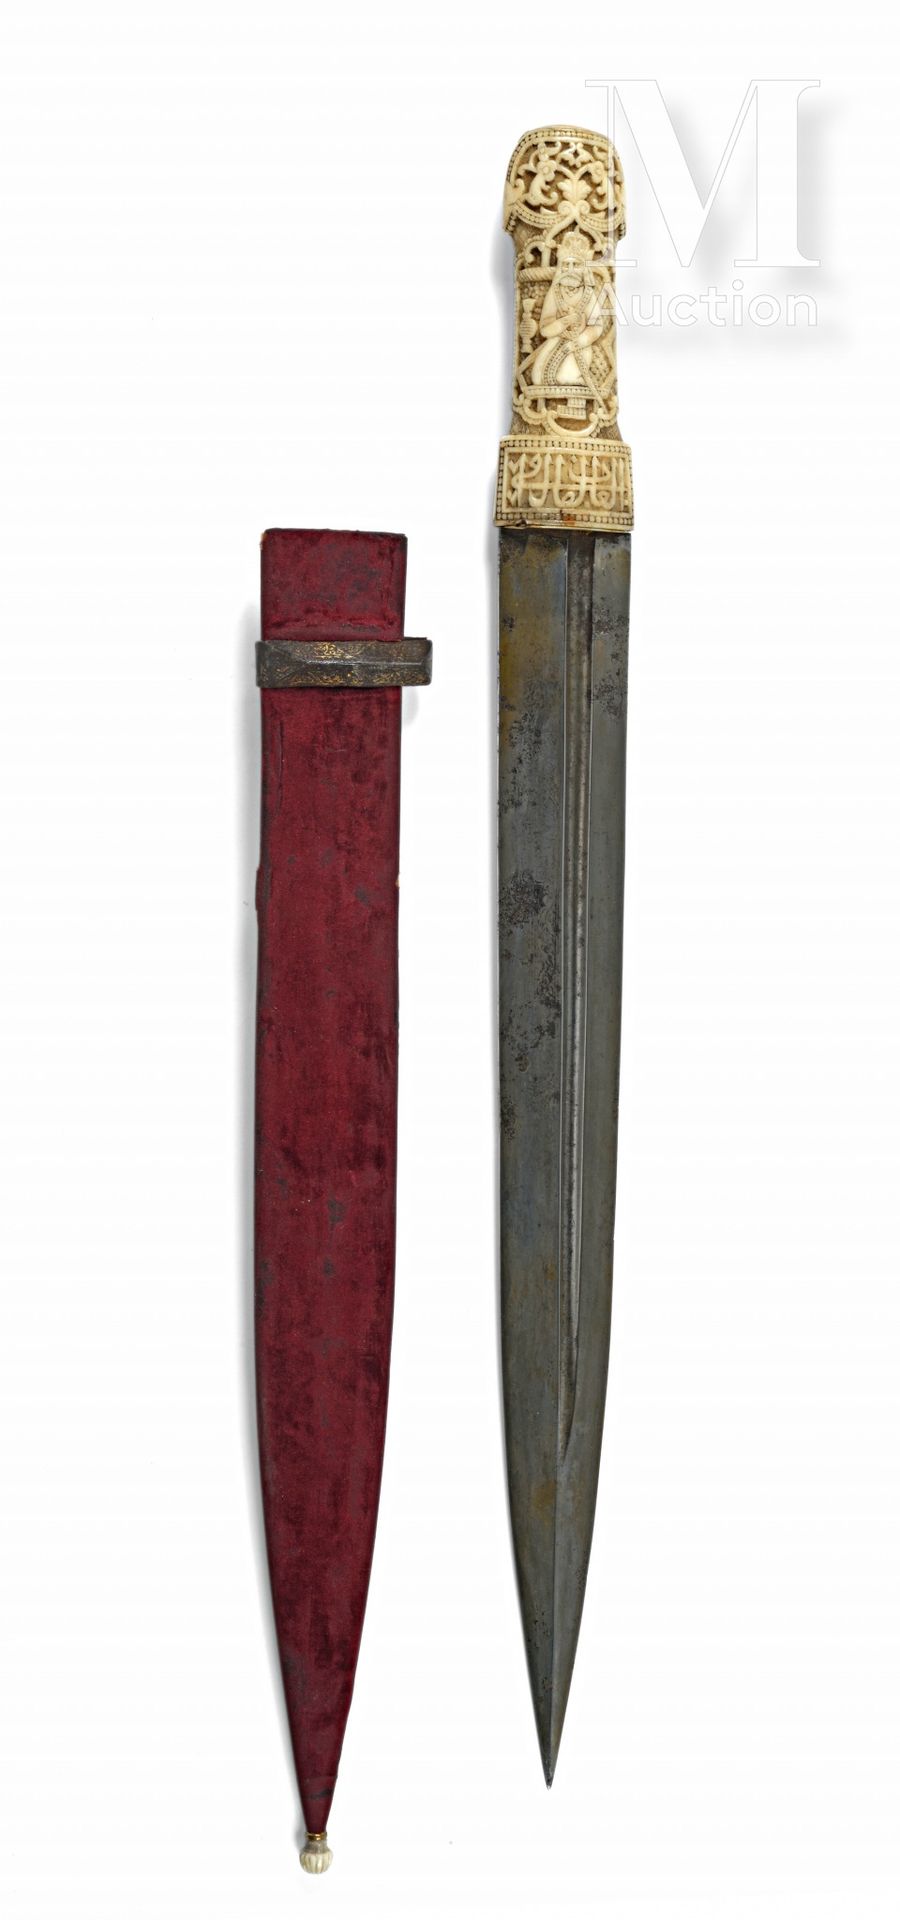 Grand Kindjal qajar Iran, circa 1850

With straight blade in wavy damascus steel&hellip;